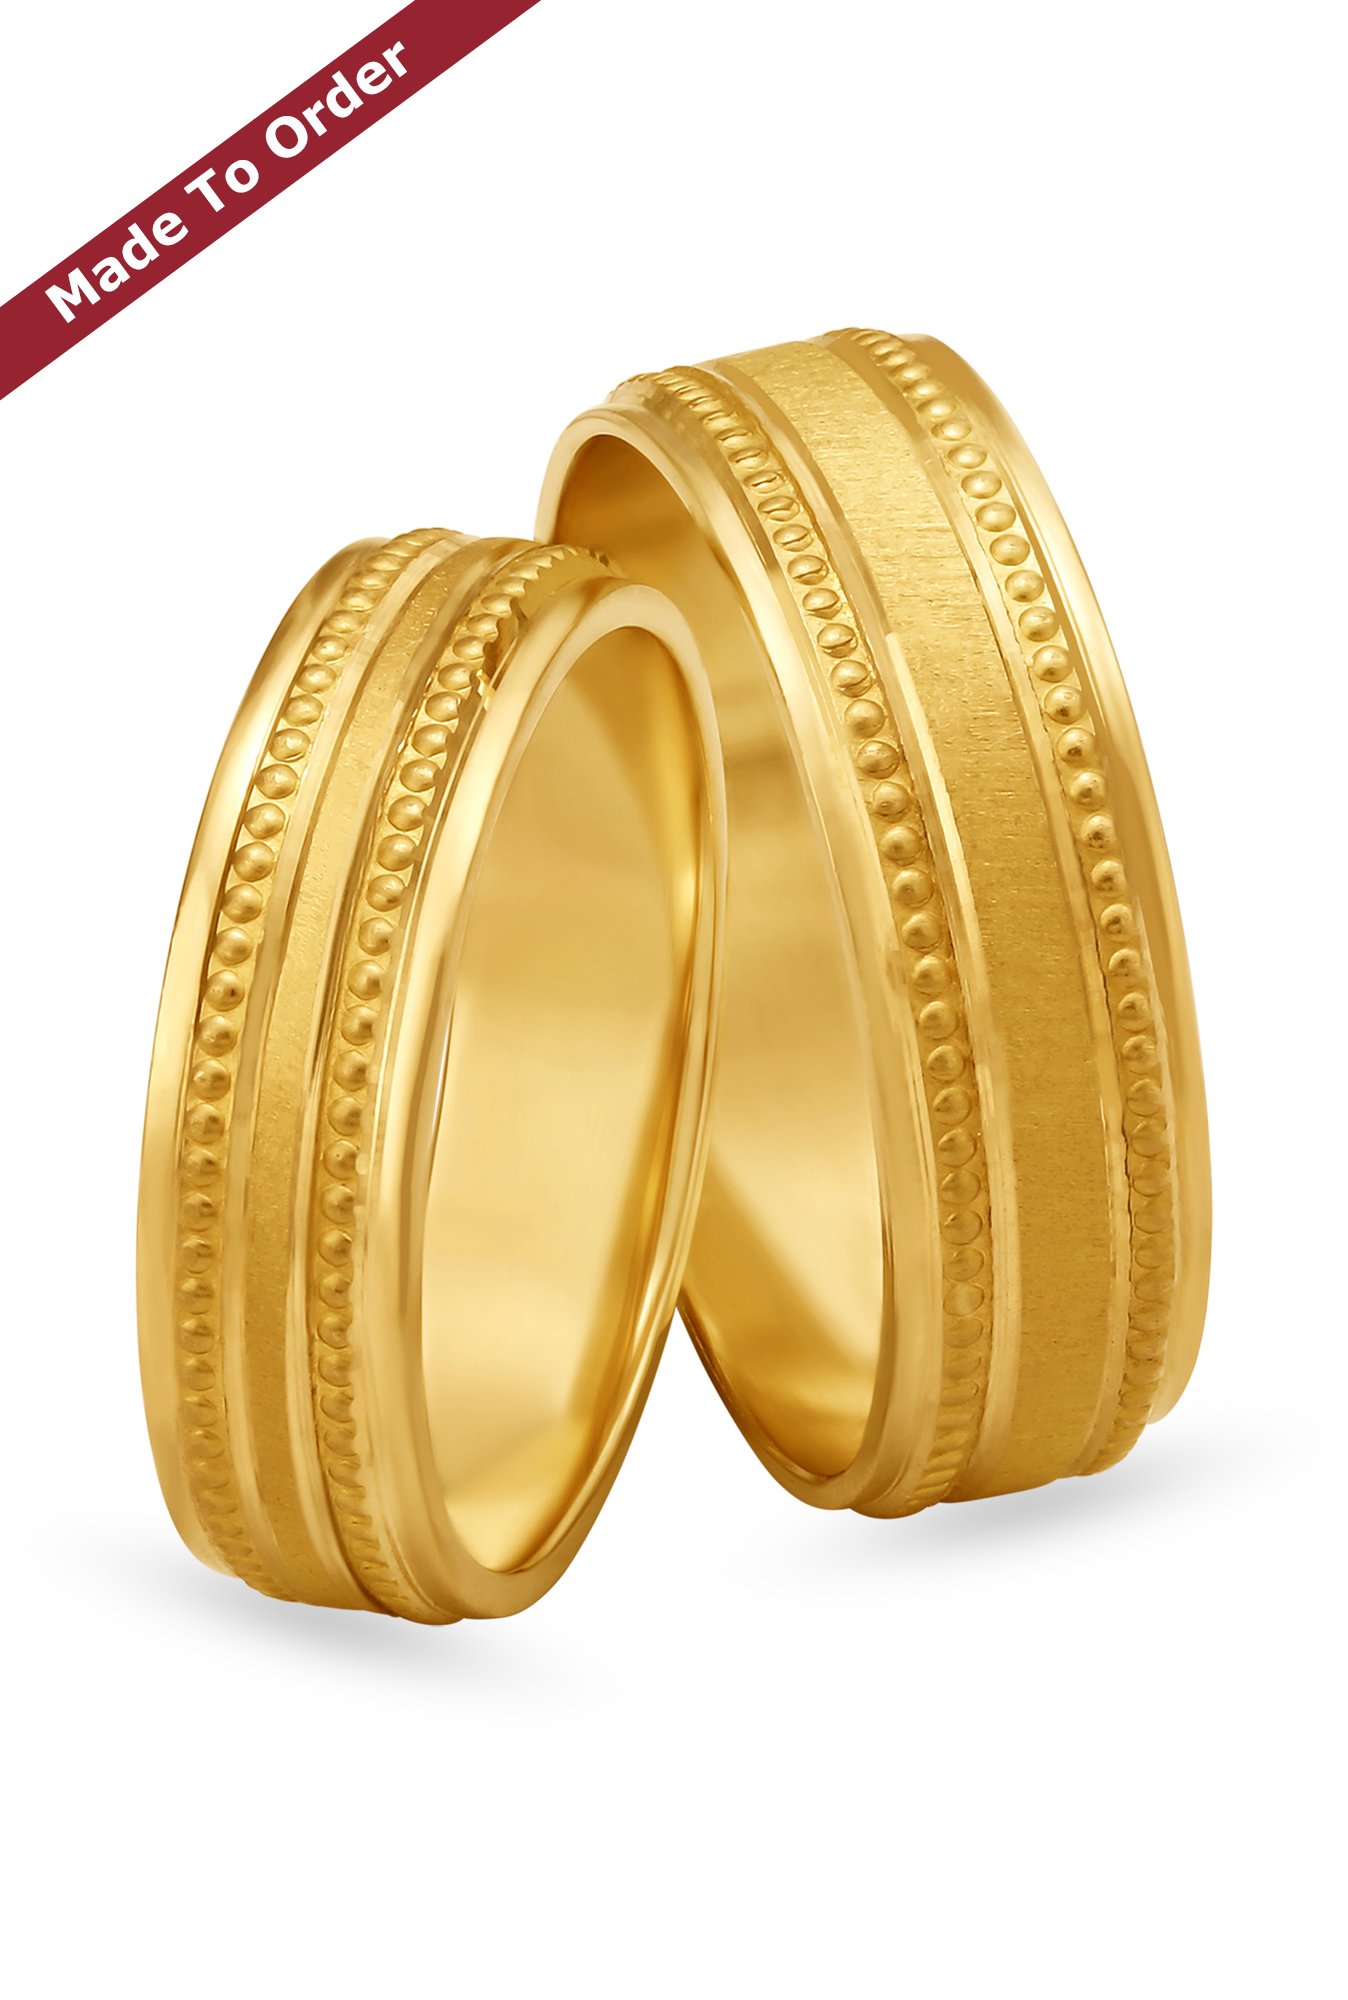 Engagement Rings | Diamond Rings - PC Chandra Jewellers